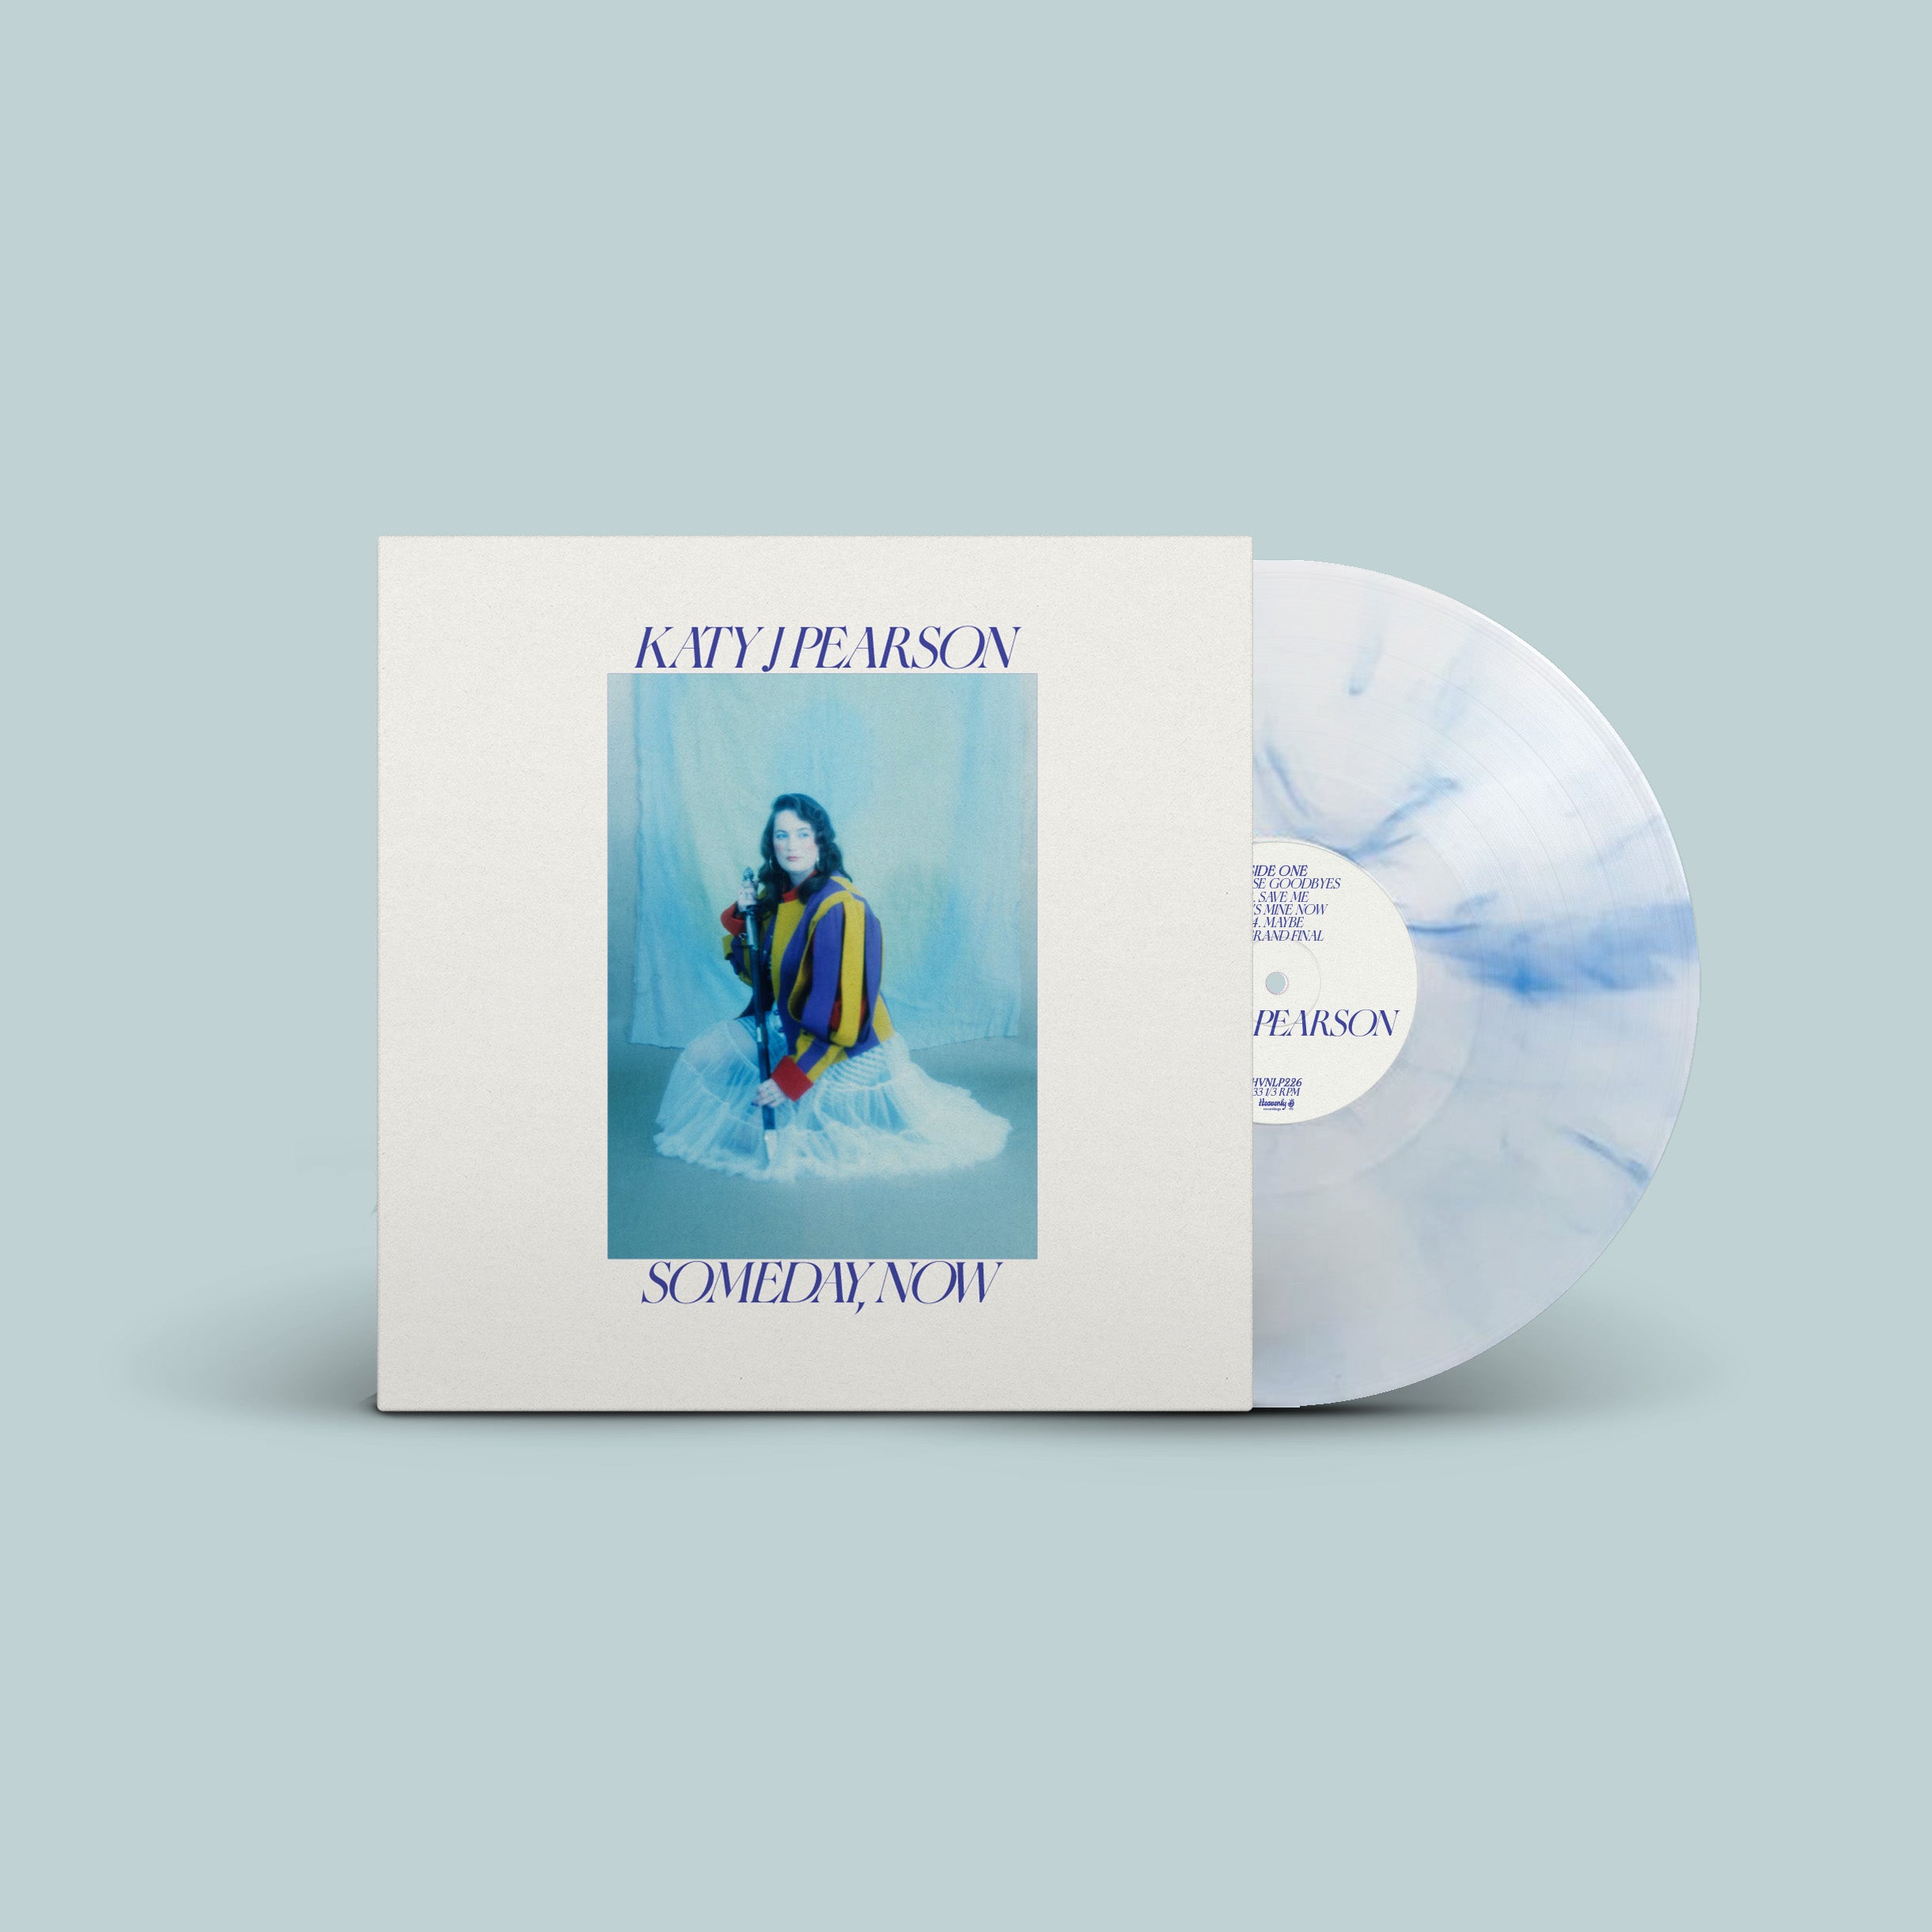 Katy J Pearson - Someday, Now: Limited Transparent Blue/White Marble Vinyl LP